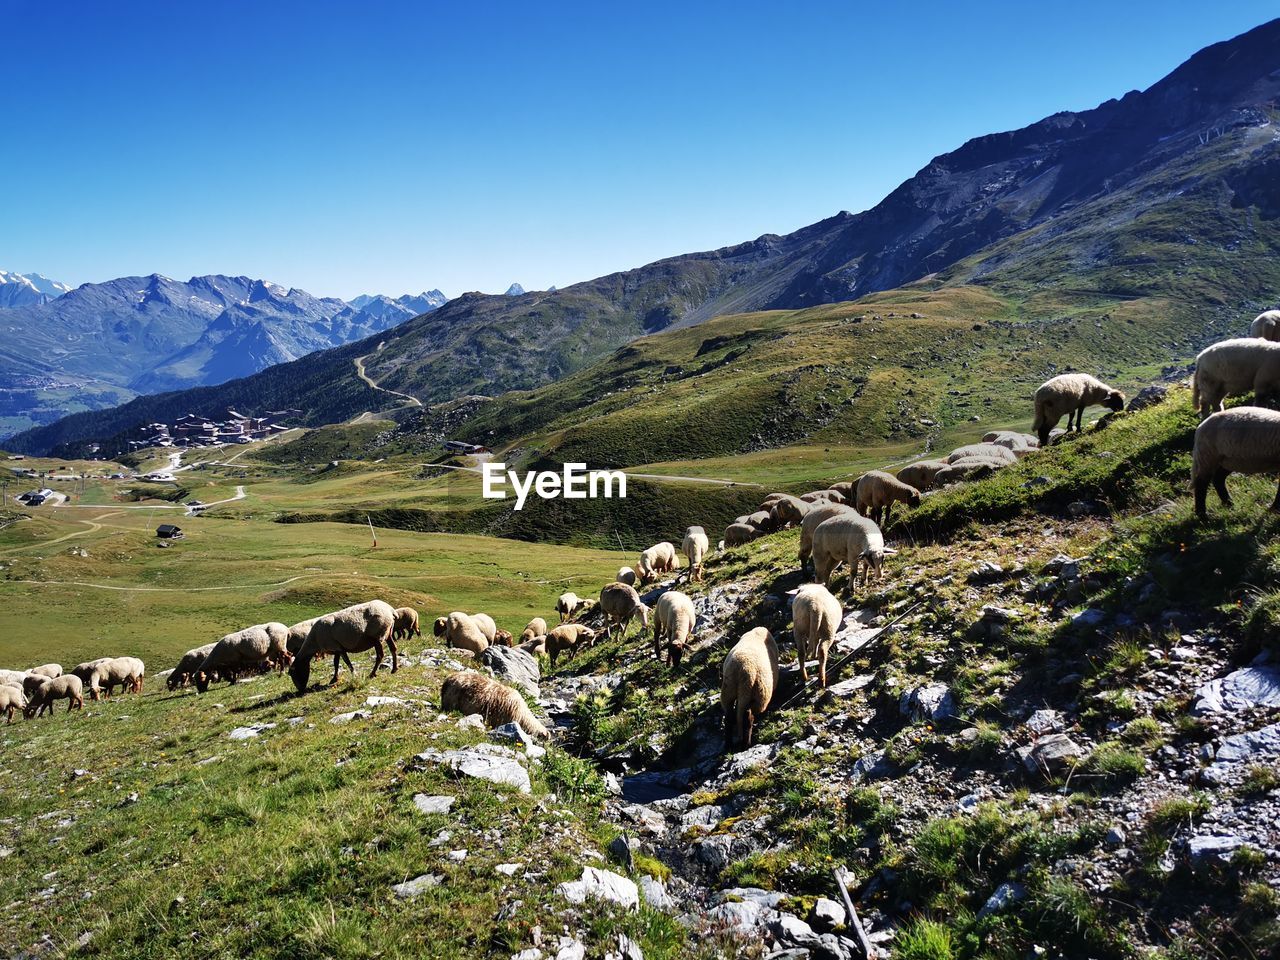 FLOCK OF SHEEP ON MOUNTAIN RANGE